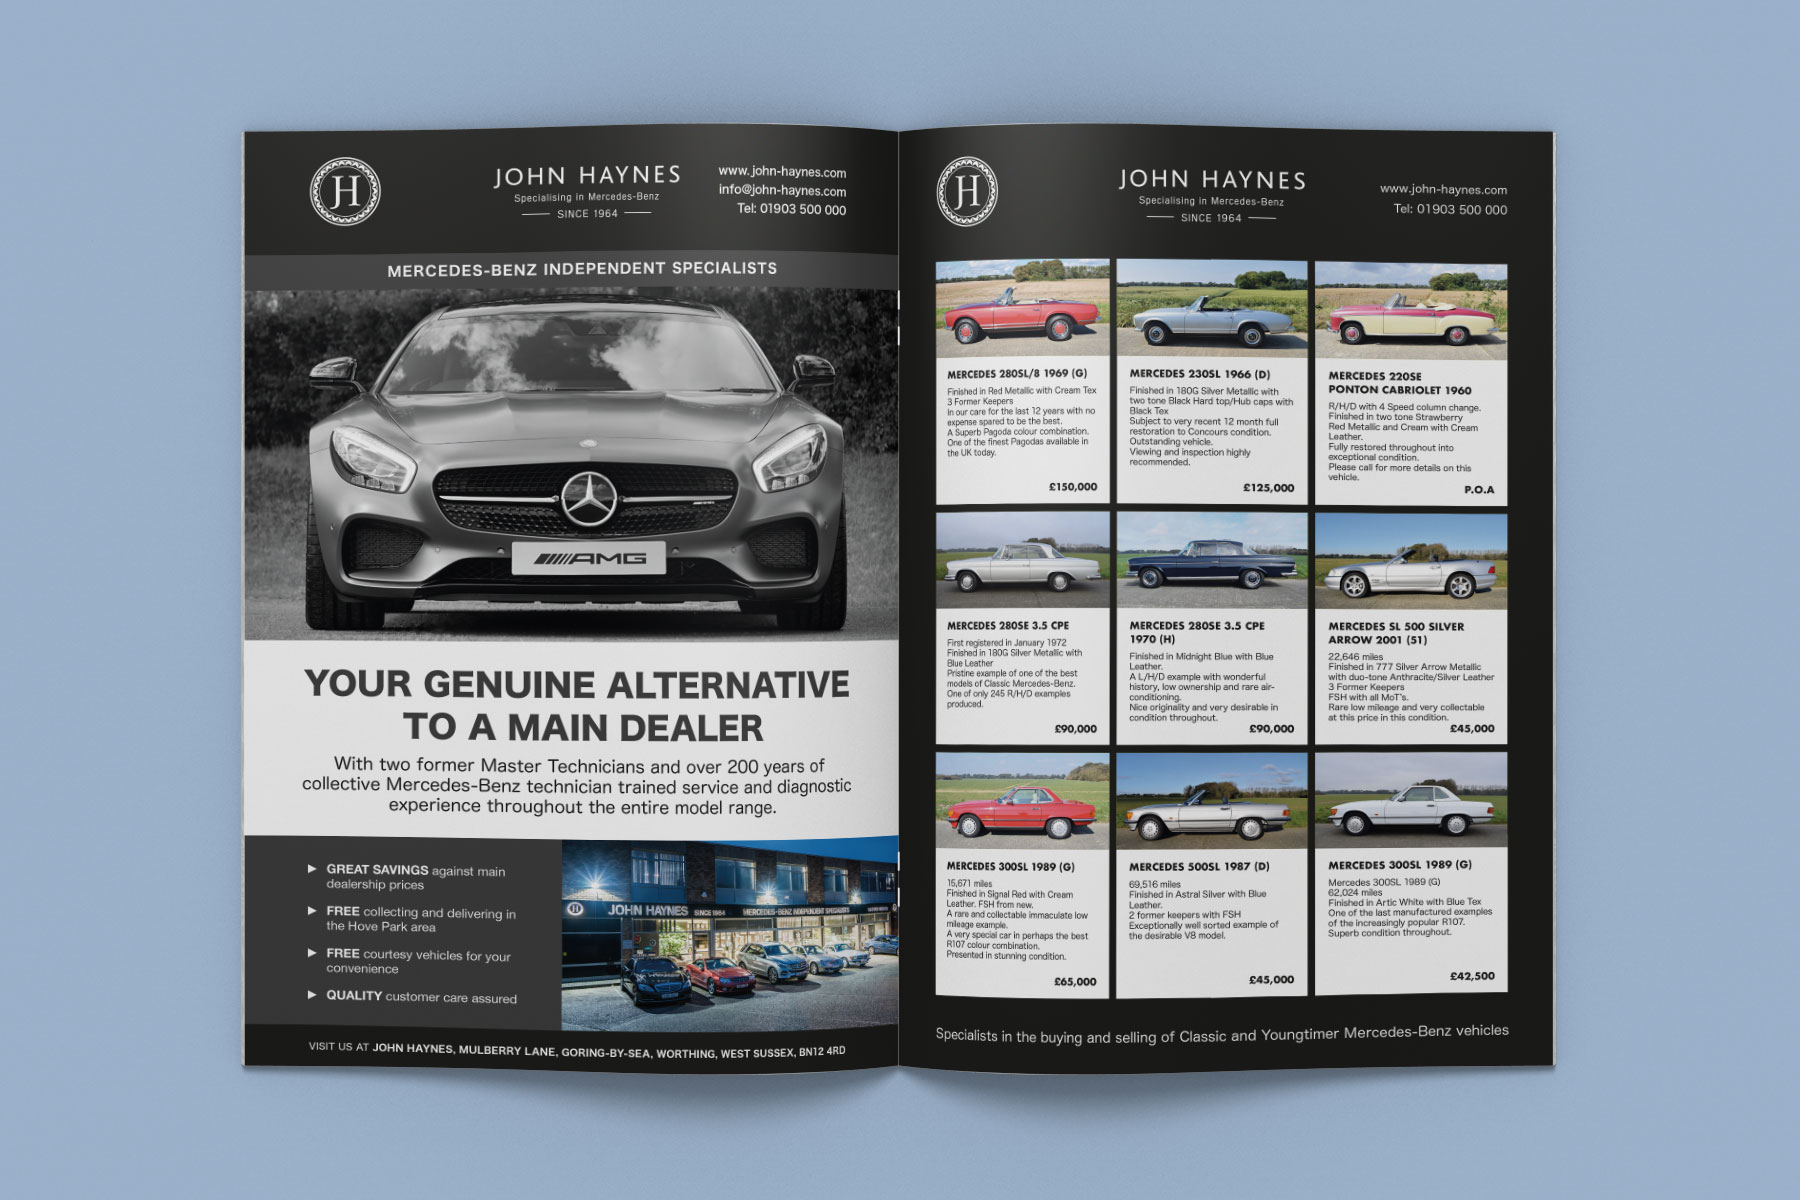 Mercedes Benz dealership magazine adverts